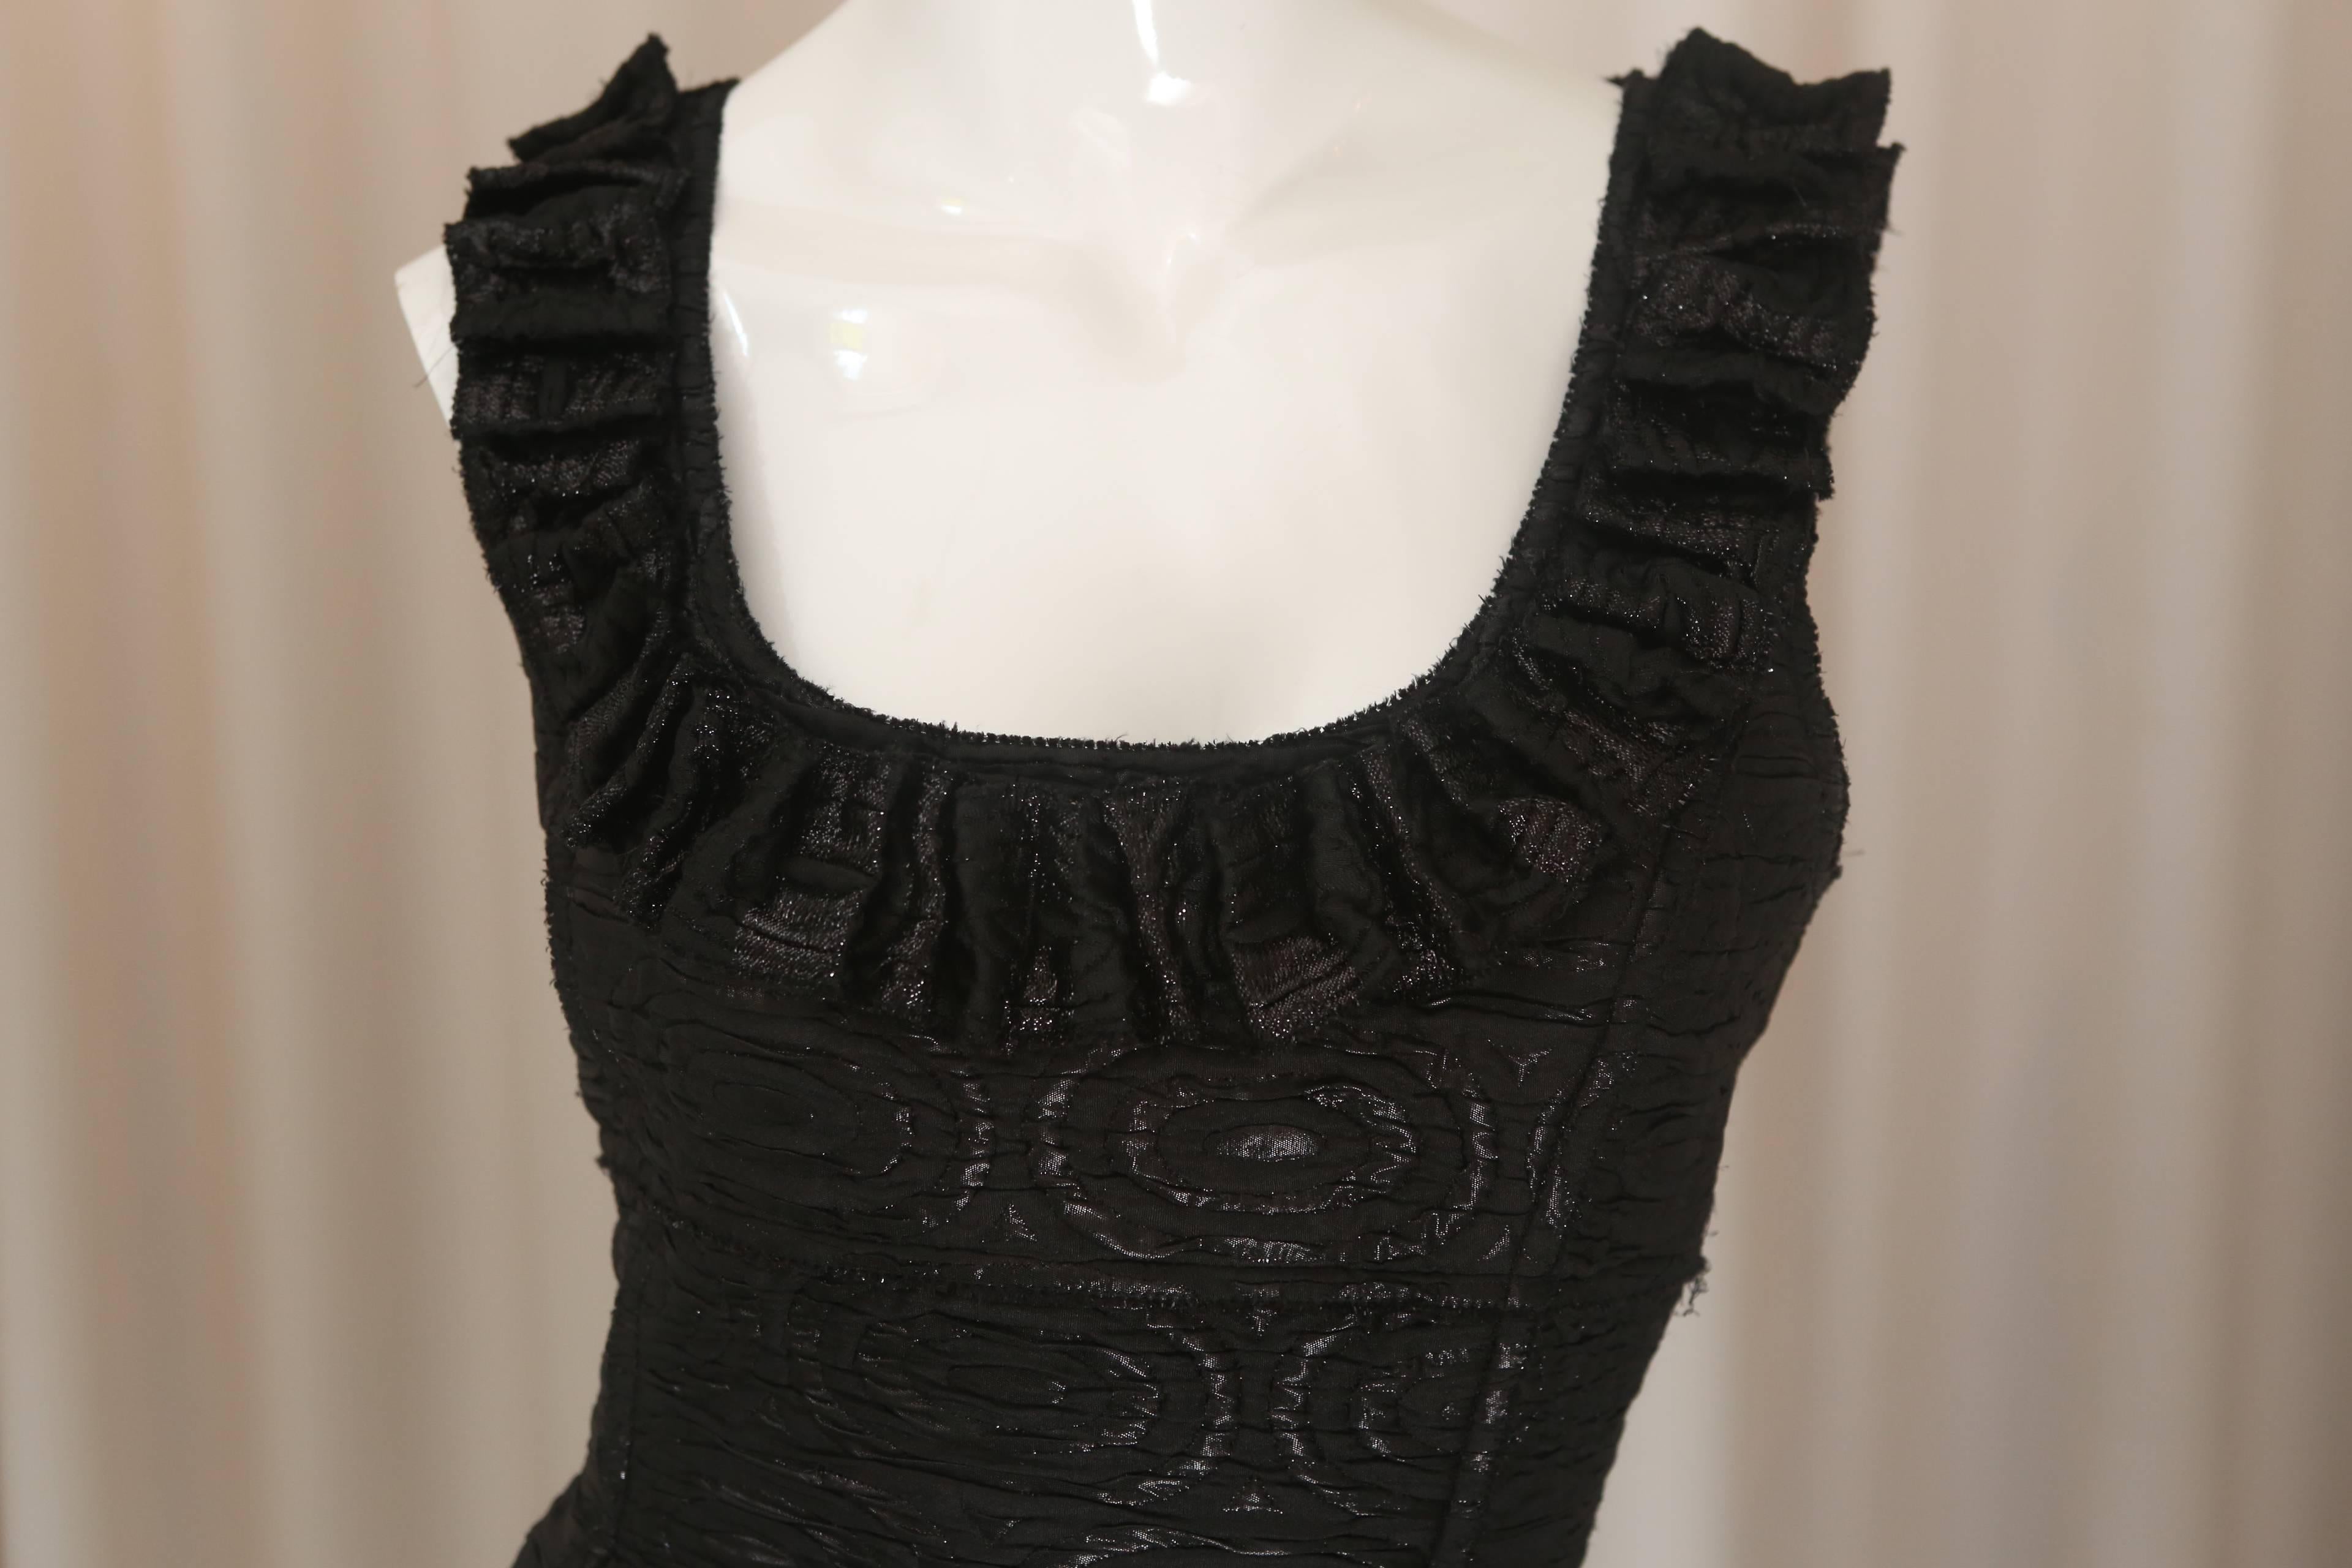 Oscar de la Renta black metallic brocade printed dress W/ ruffle detail & back zip closure.